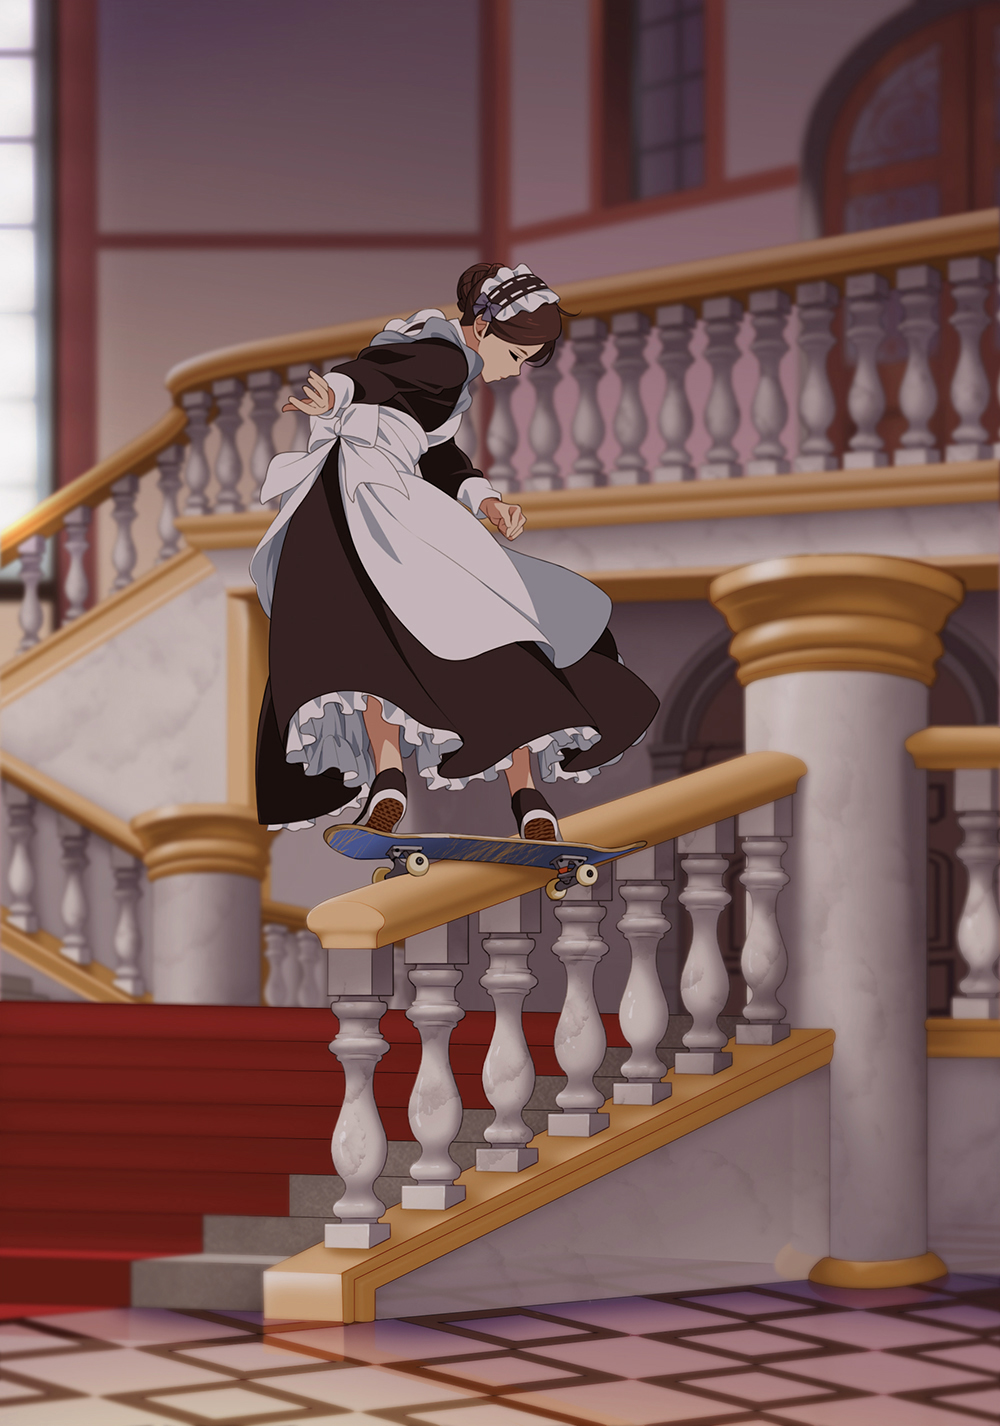 Anime 1000x1426 anime anime girls digital art artwork 2D portrait display skateboard skateboarding maid outfit